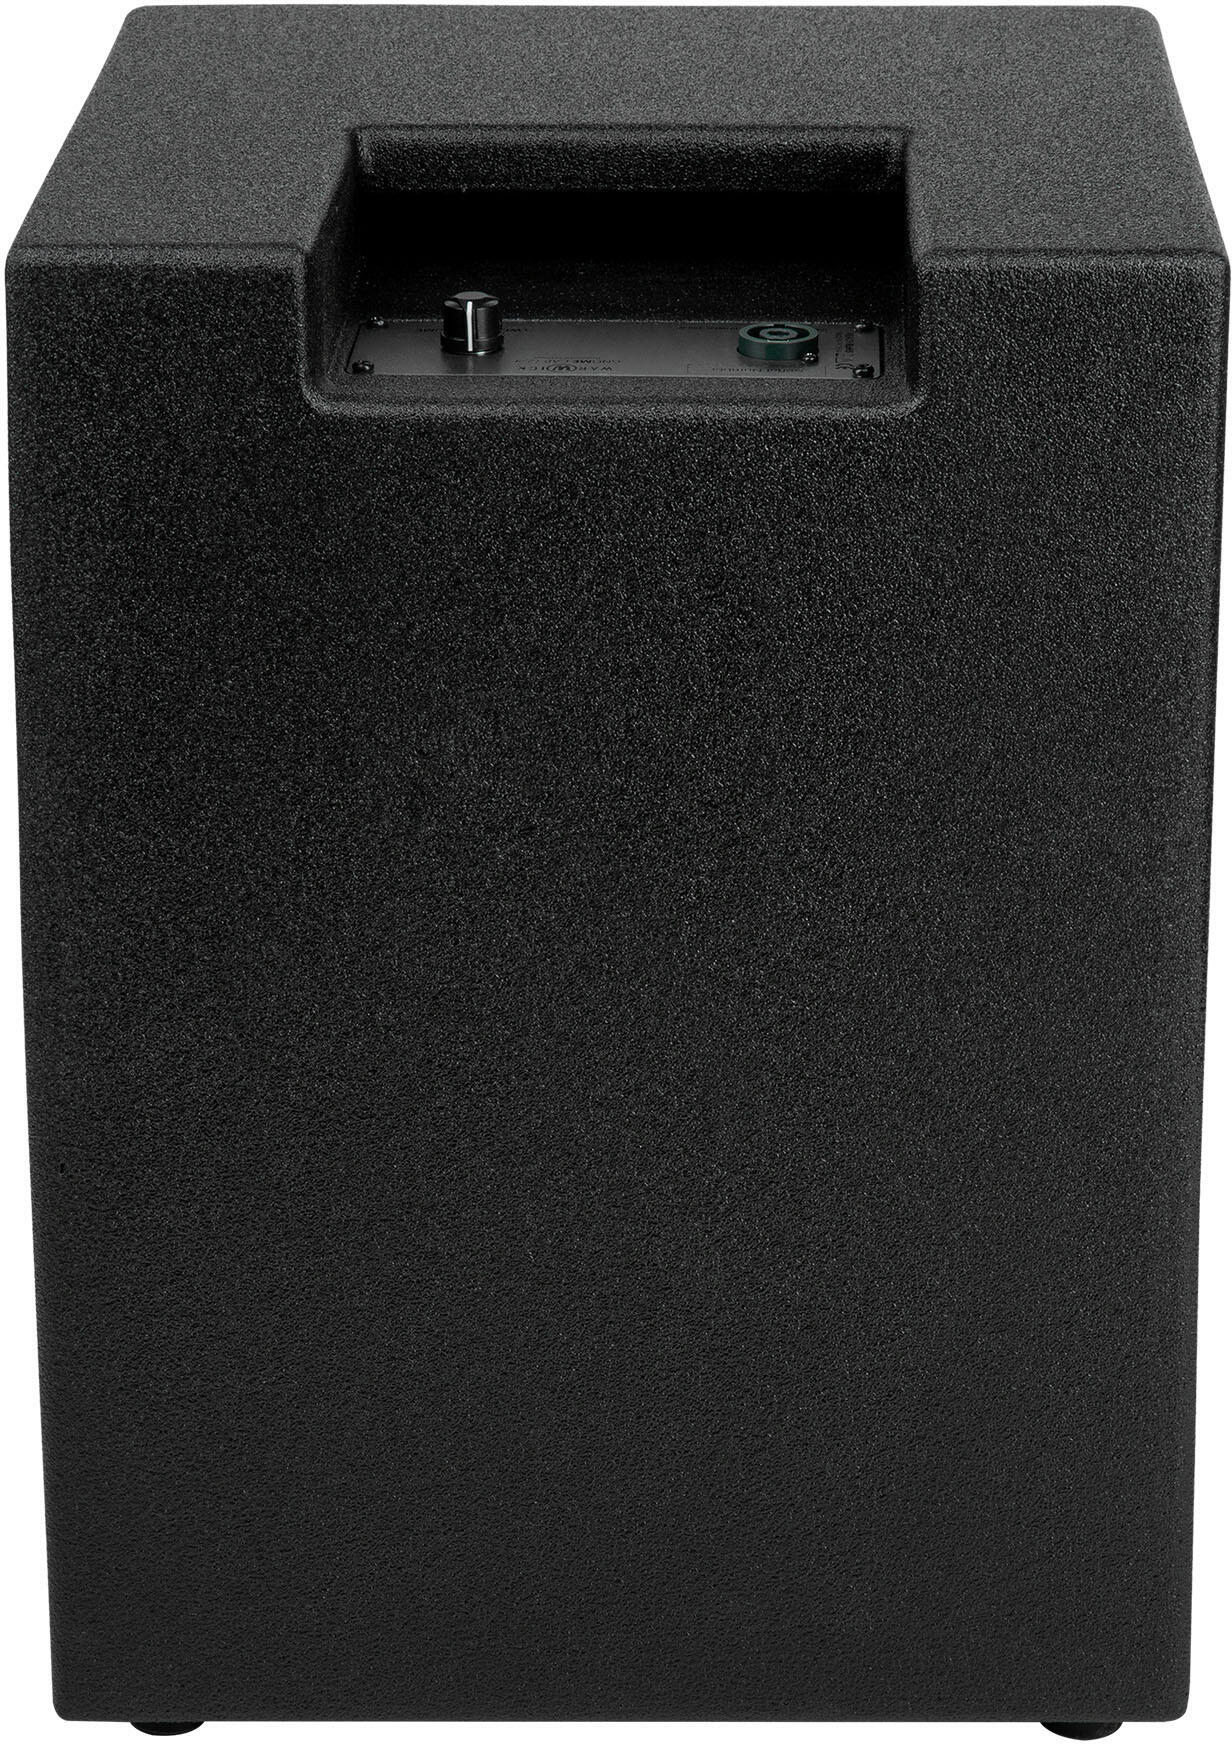 Warwick Gnome Pro Cab 12/4 Bass Cab 1x12 300w 4-ohms - Bass amp cabinet - Variation 1